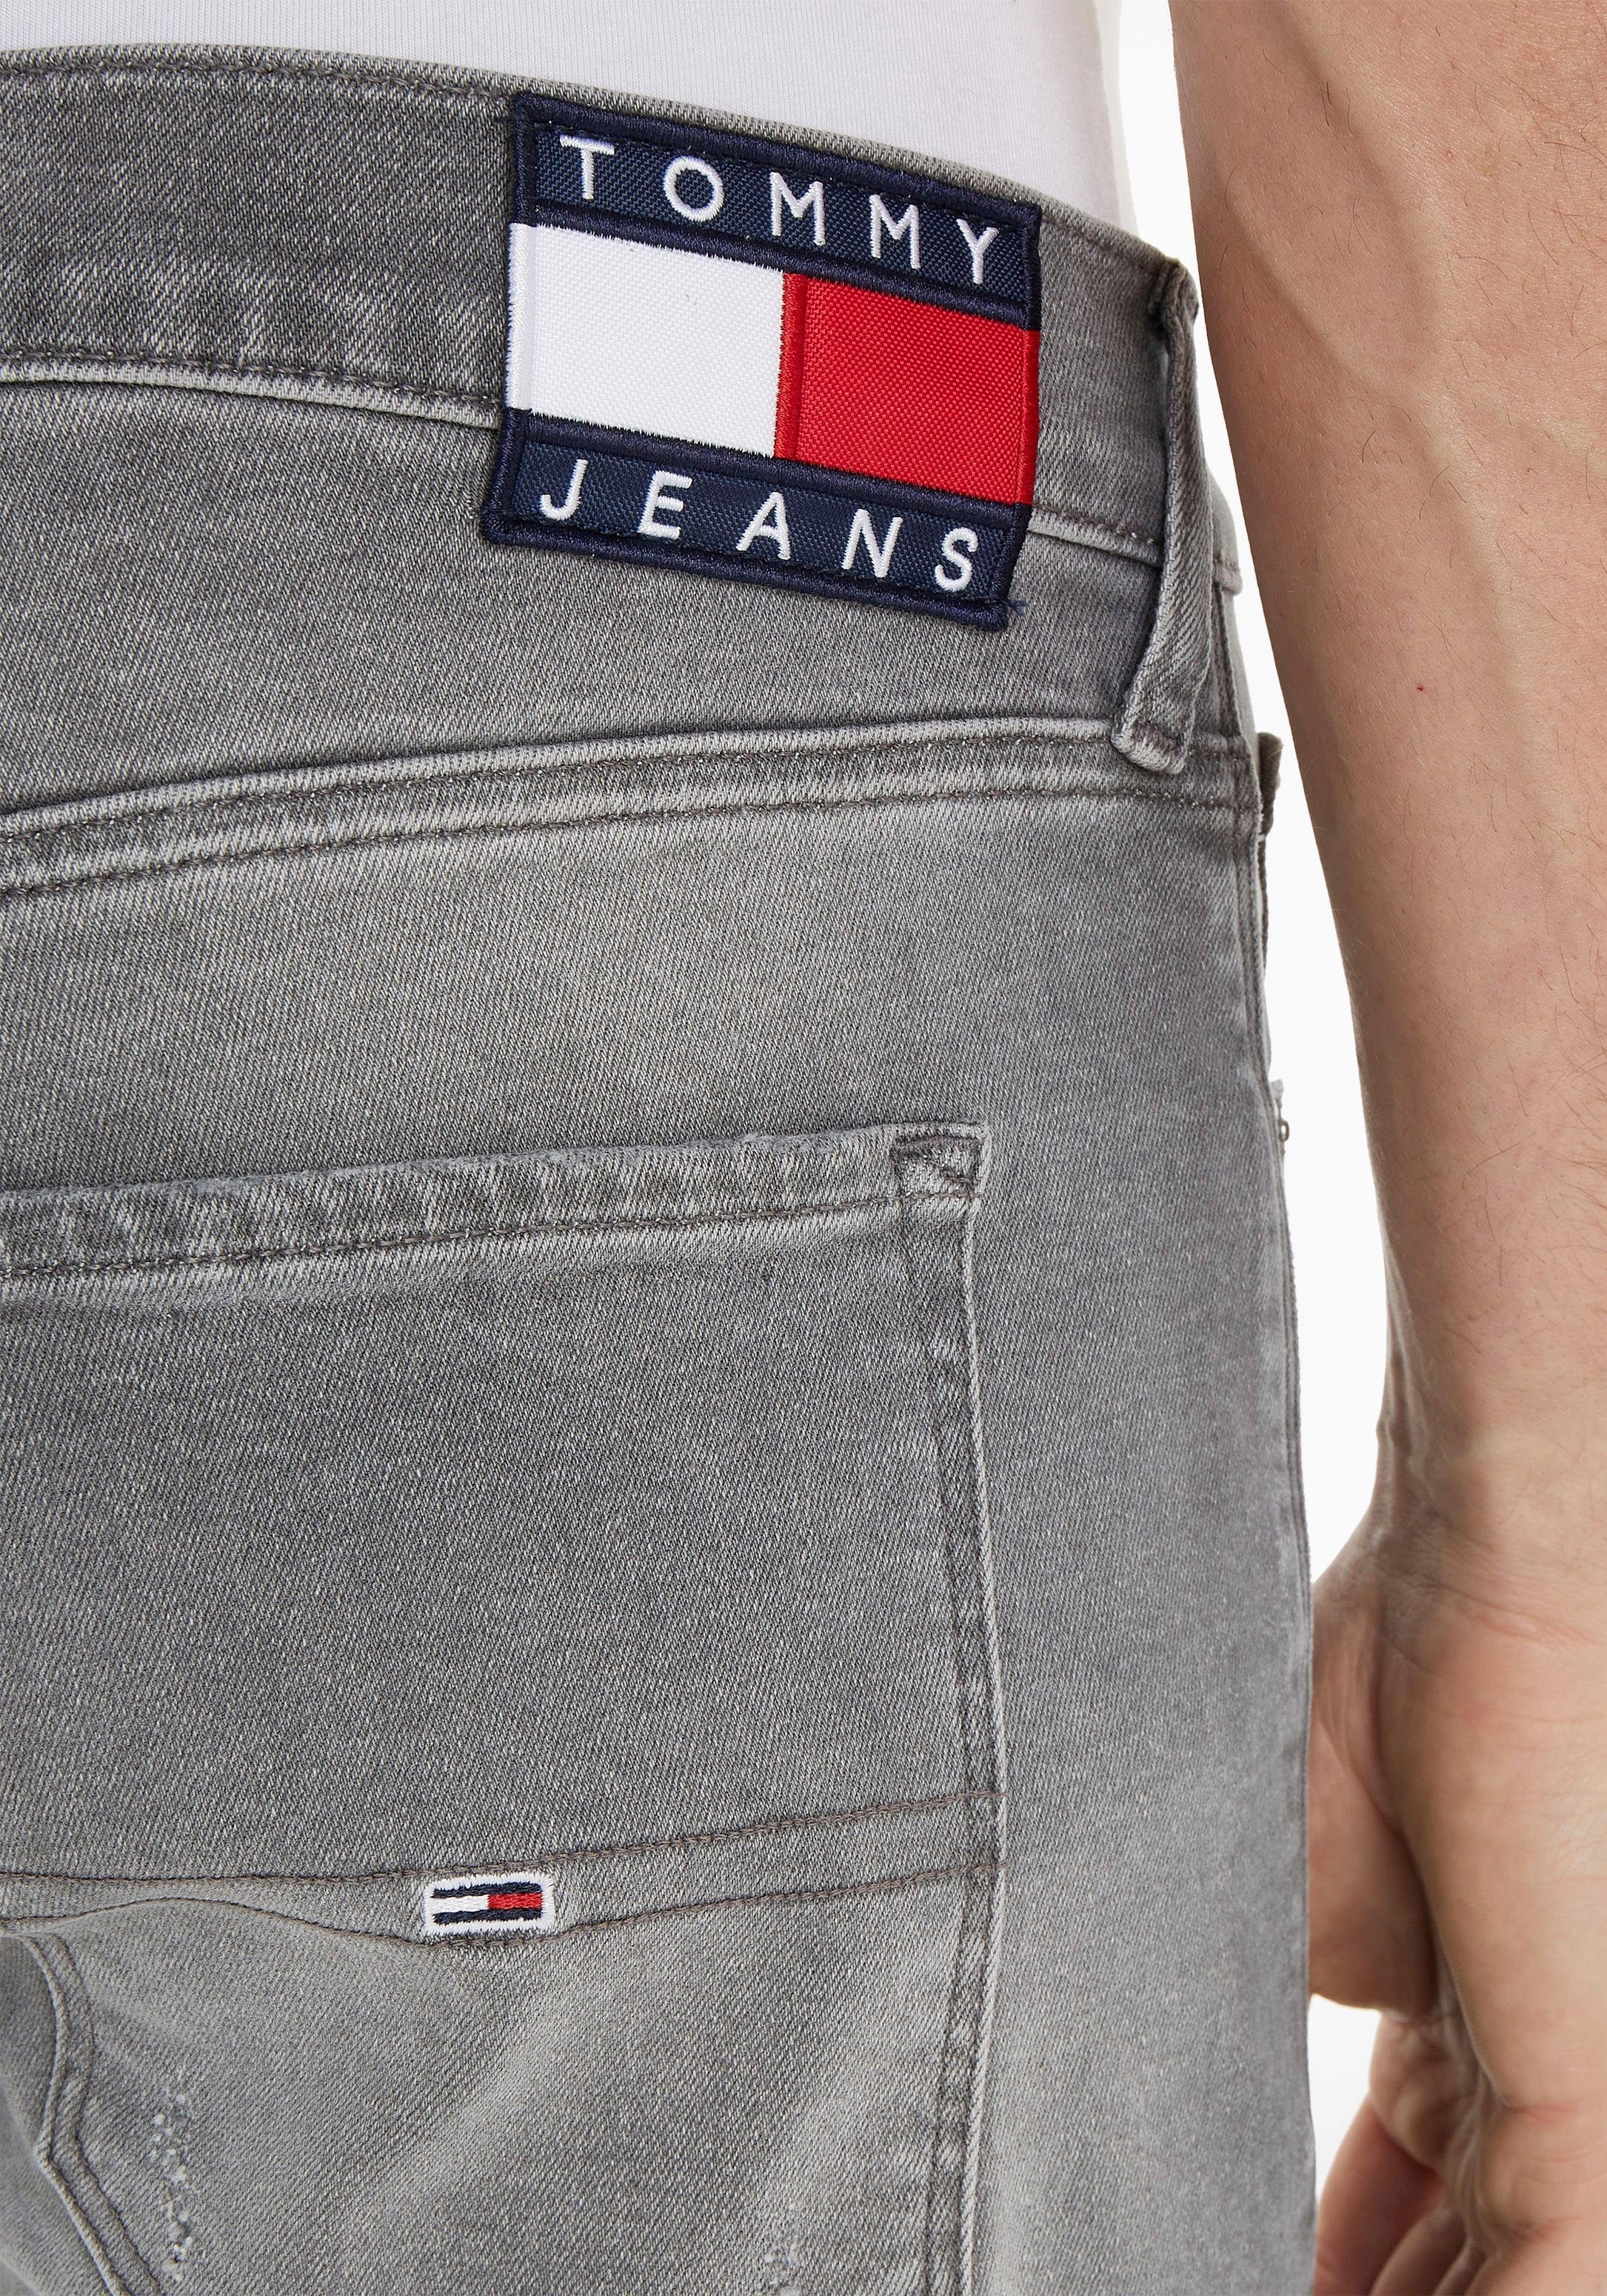 Jeanshose SCANTON Y Jeans Tommy SLIM, 5-Pocket-Jeans Jeans Tommy von